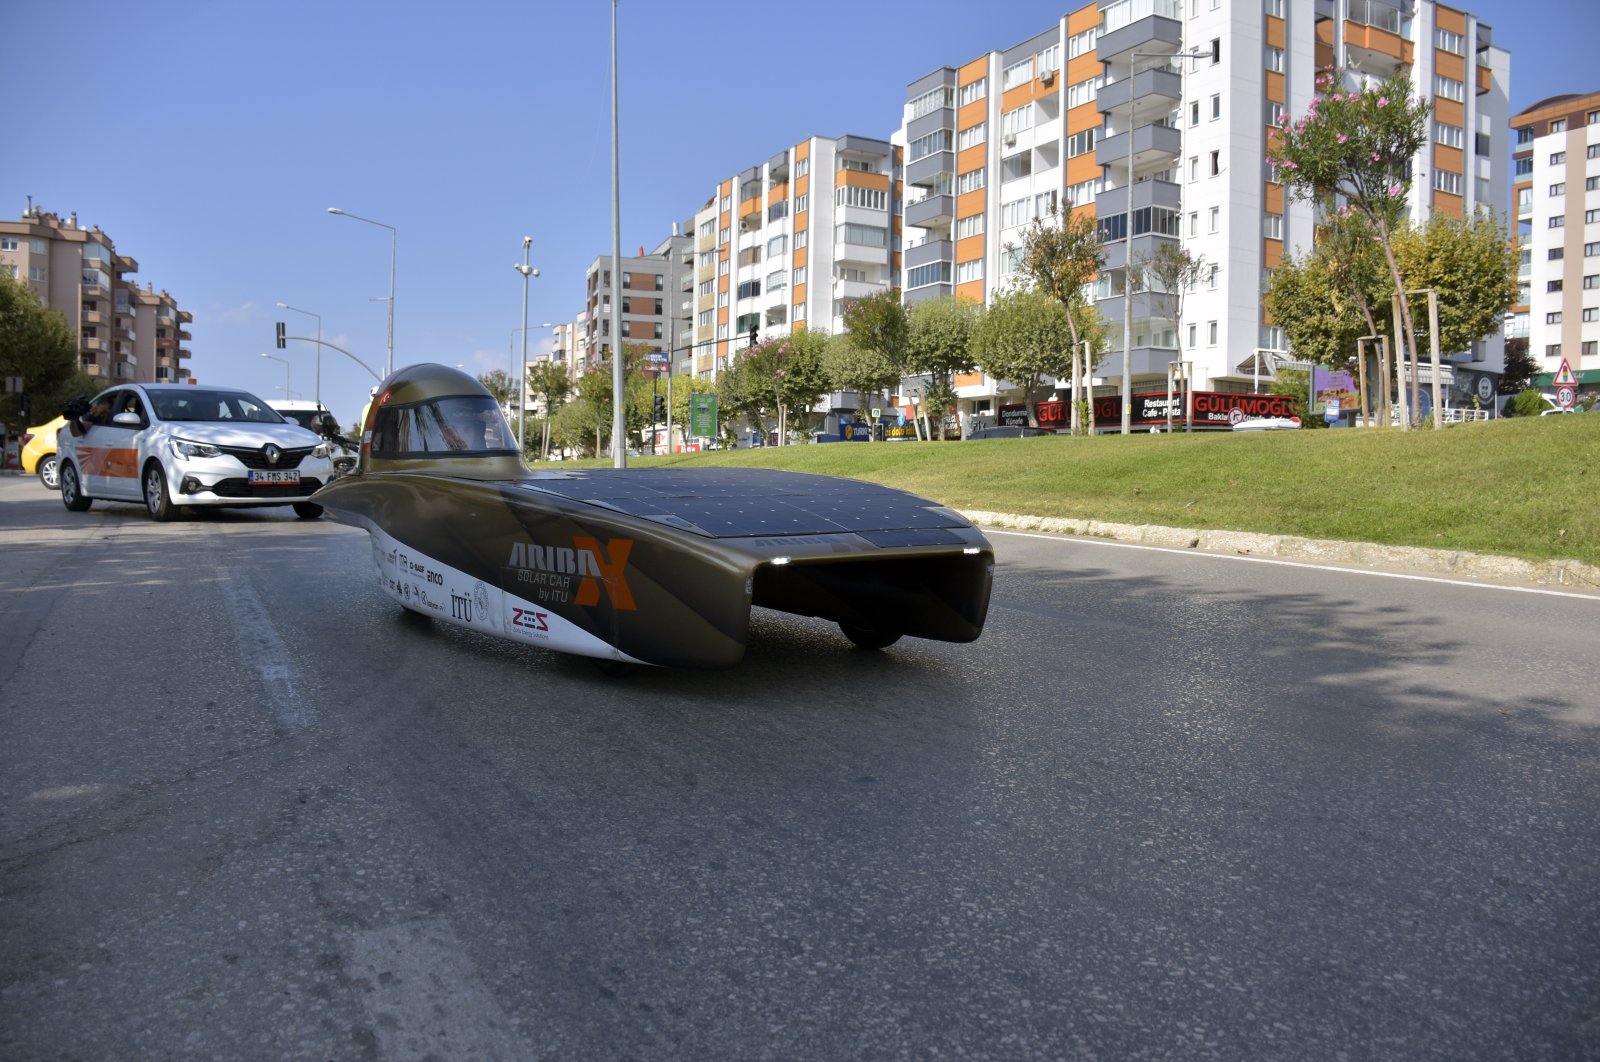 A solar car drives through a street in Bursa, northwestern Turkey, Aug. 7, 2022. (AA PHOTO)